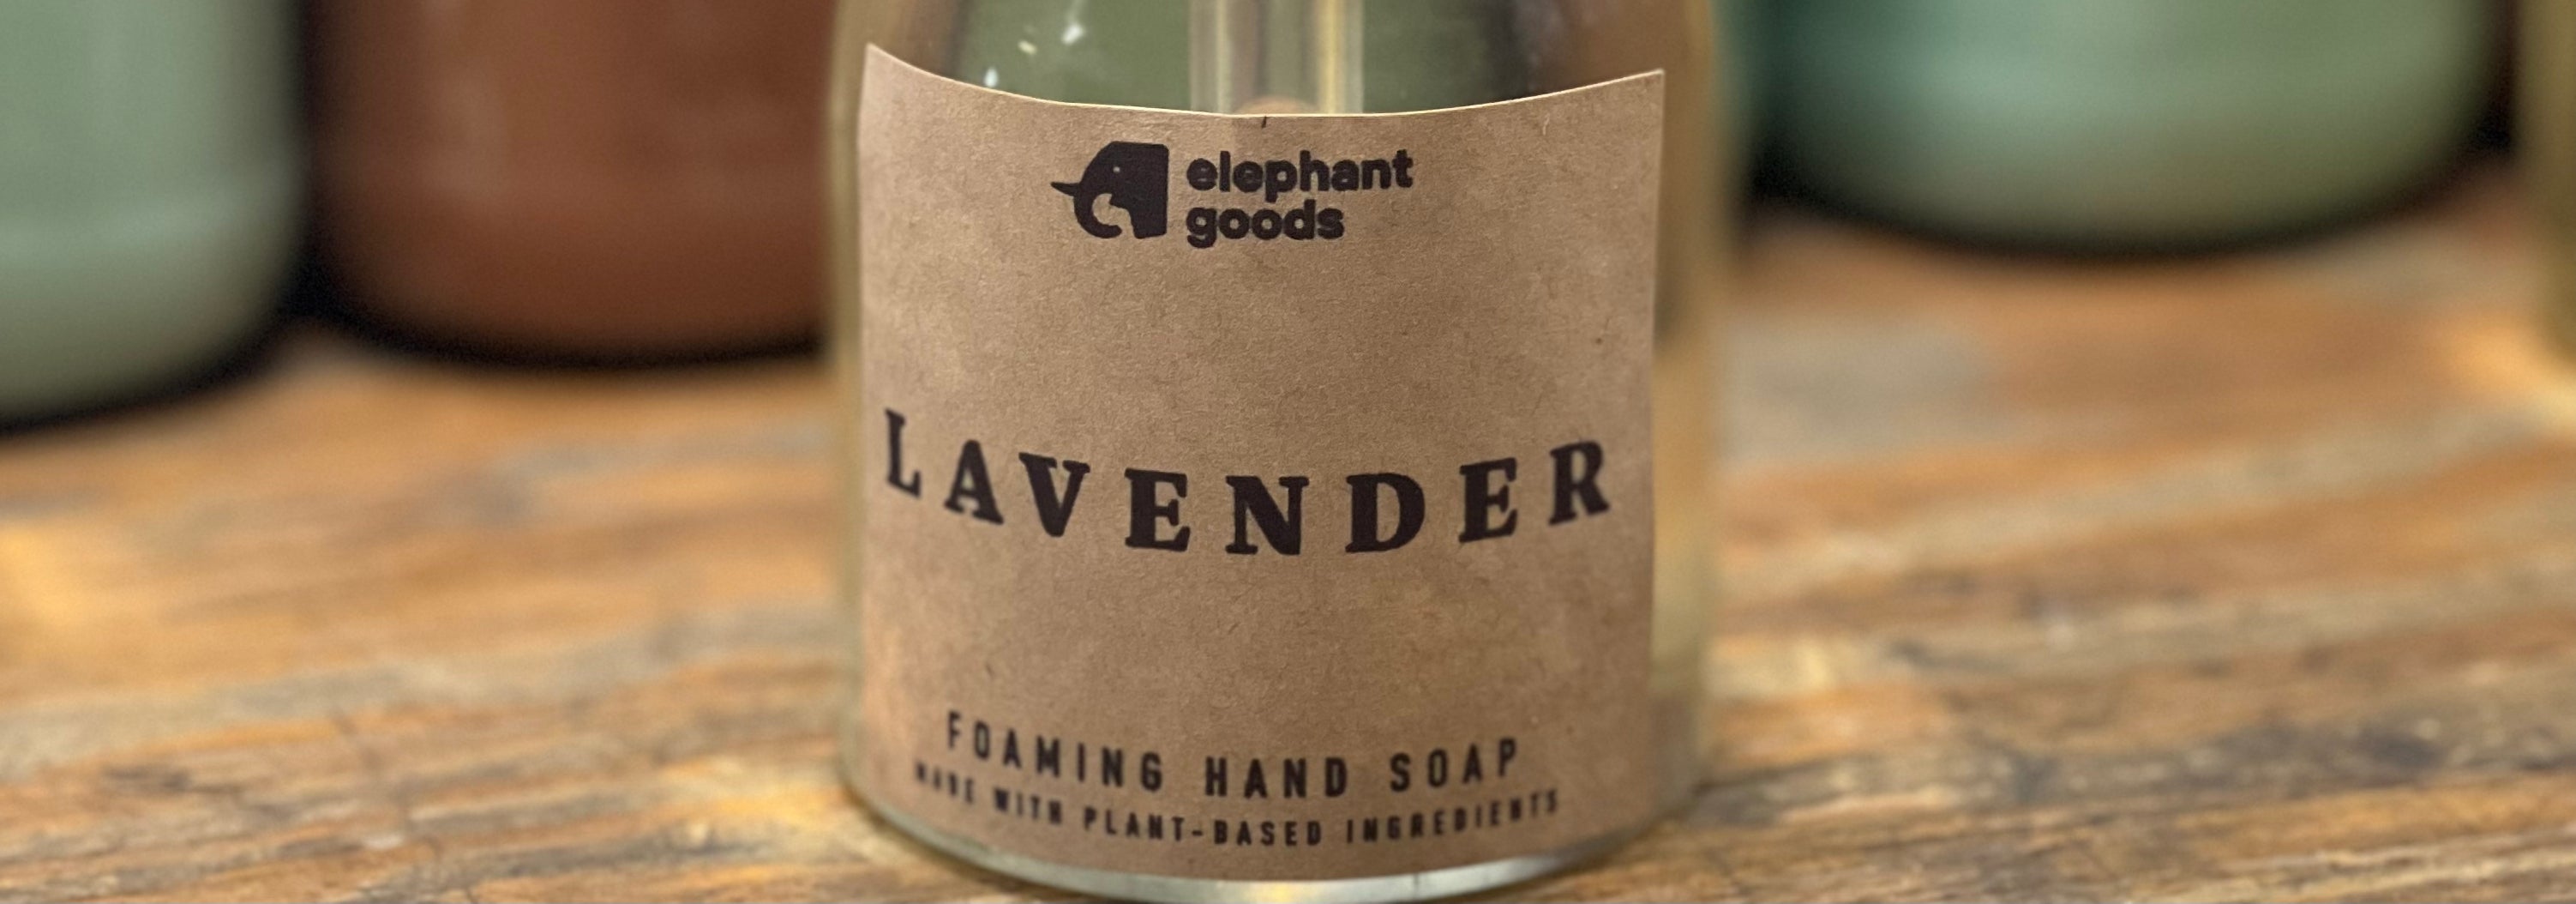 Elephant Goods Foaming Hand Soap